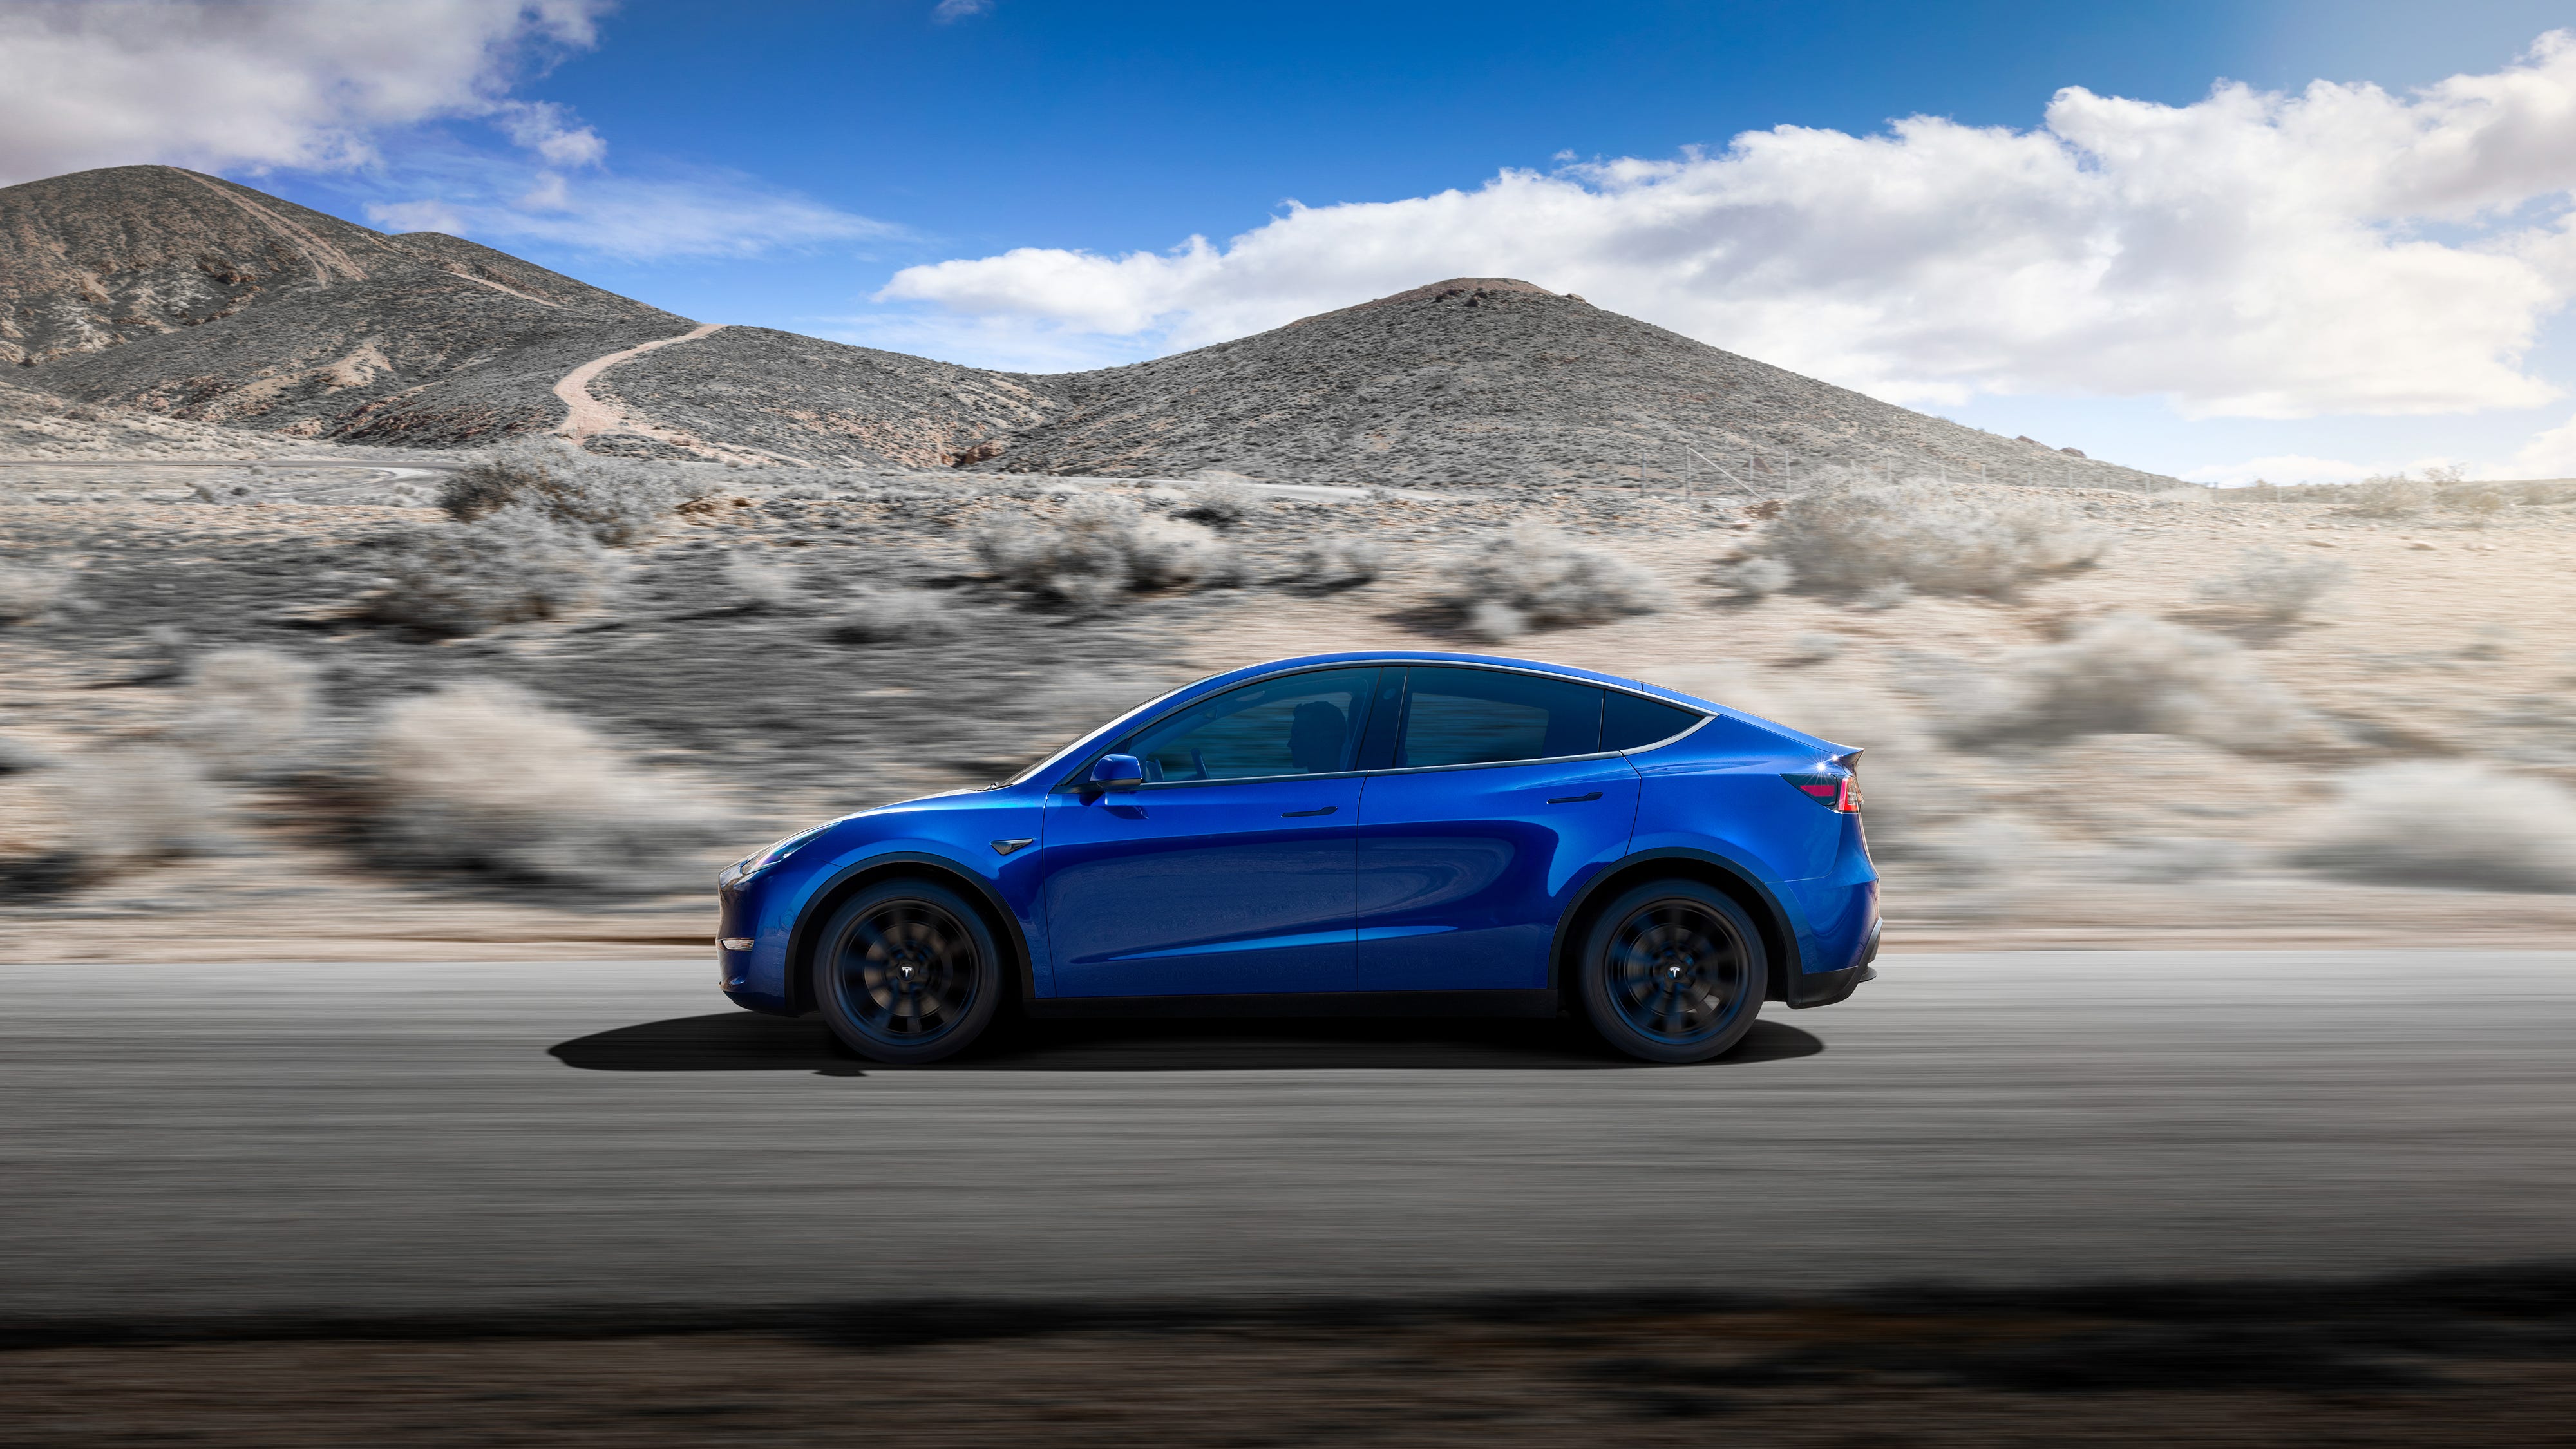 Tesla claims the Tesla Model Y ute has the same drag coefficient - 0.23 - as the Model 3 sedan.